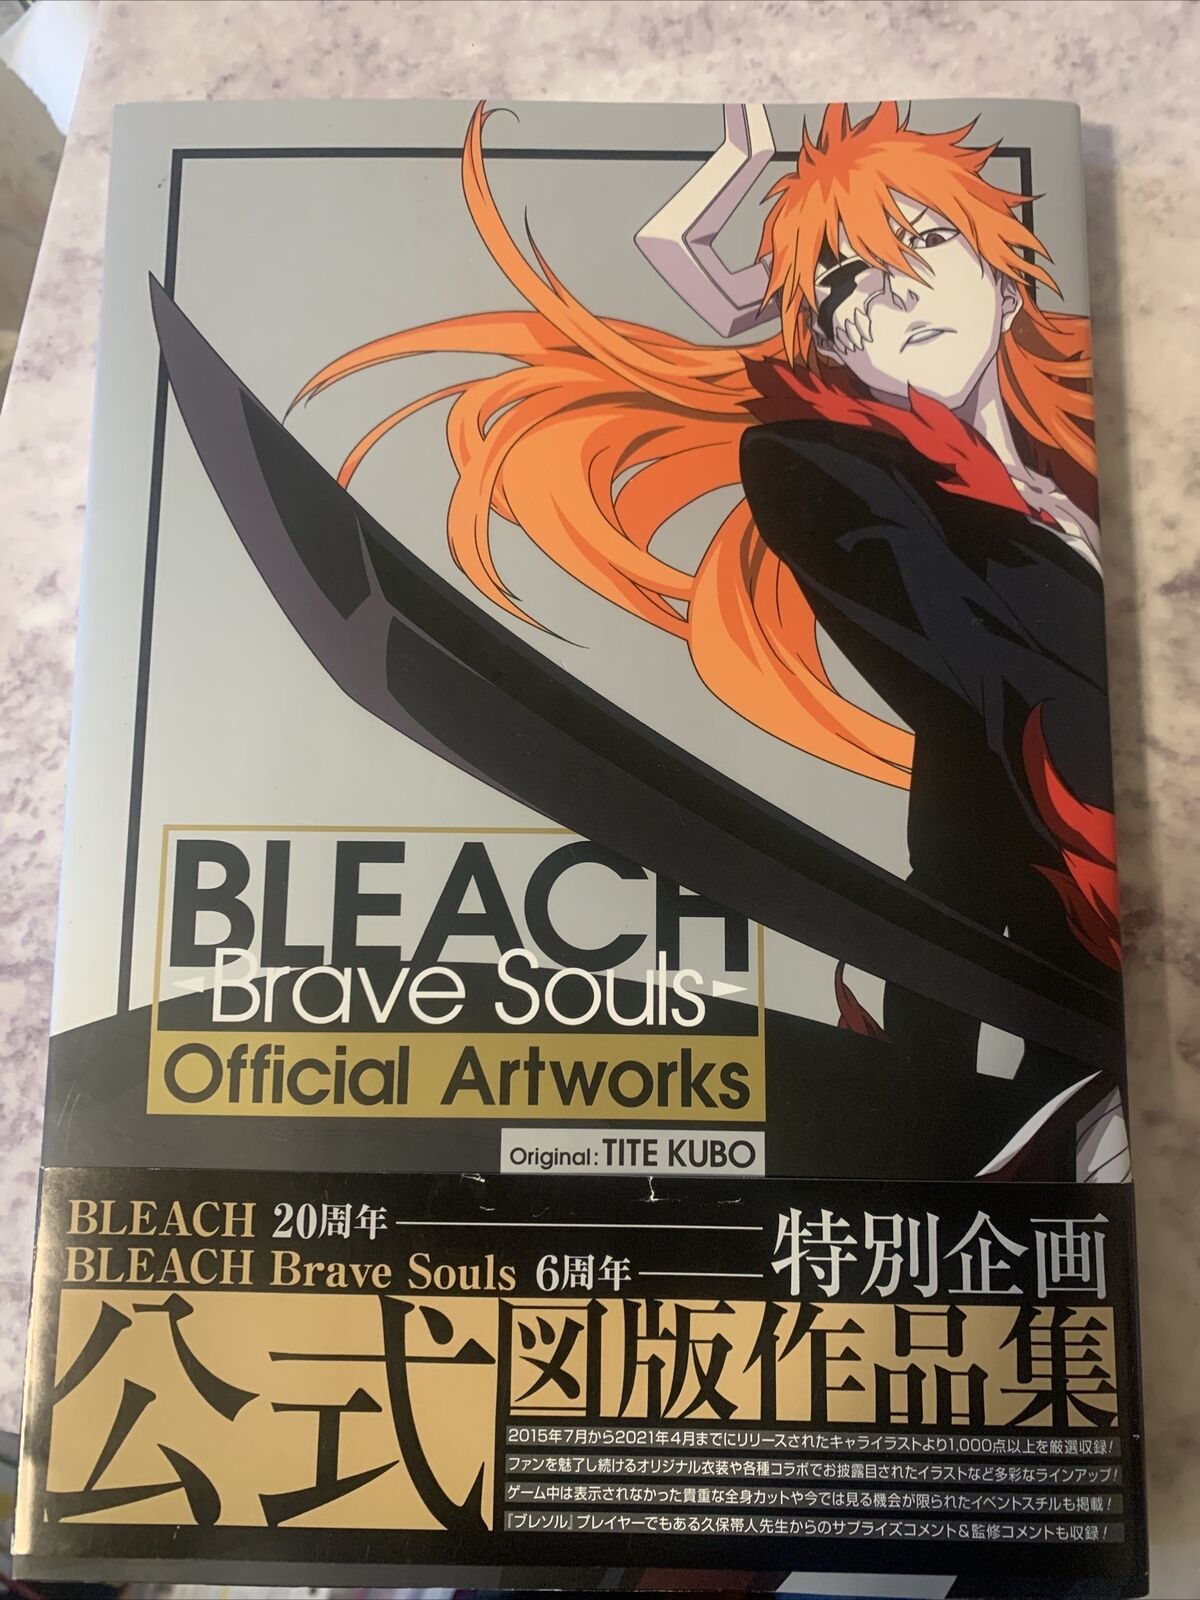 BLEACH Brave Souls Official Artworks Art Book Illustration Tite Kubo From Japan